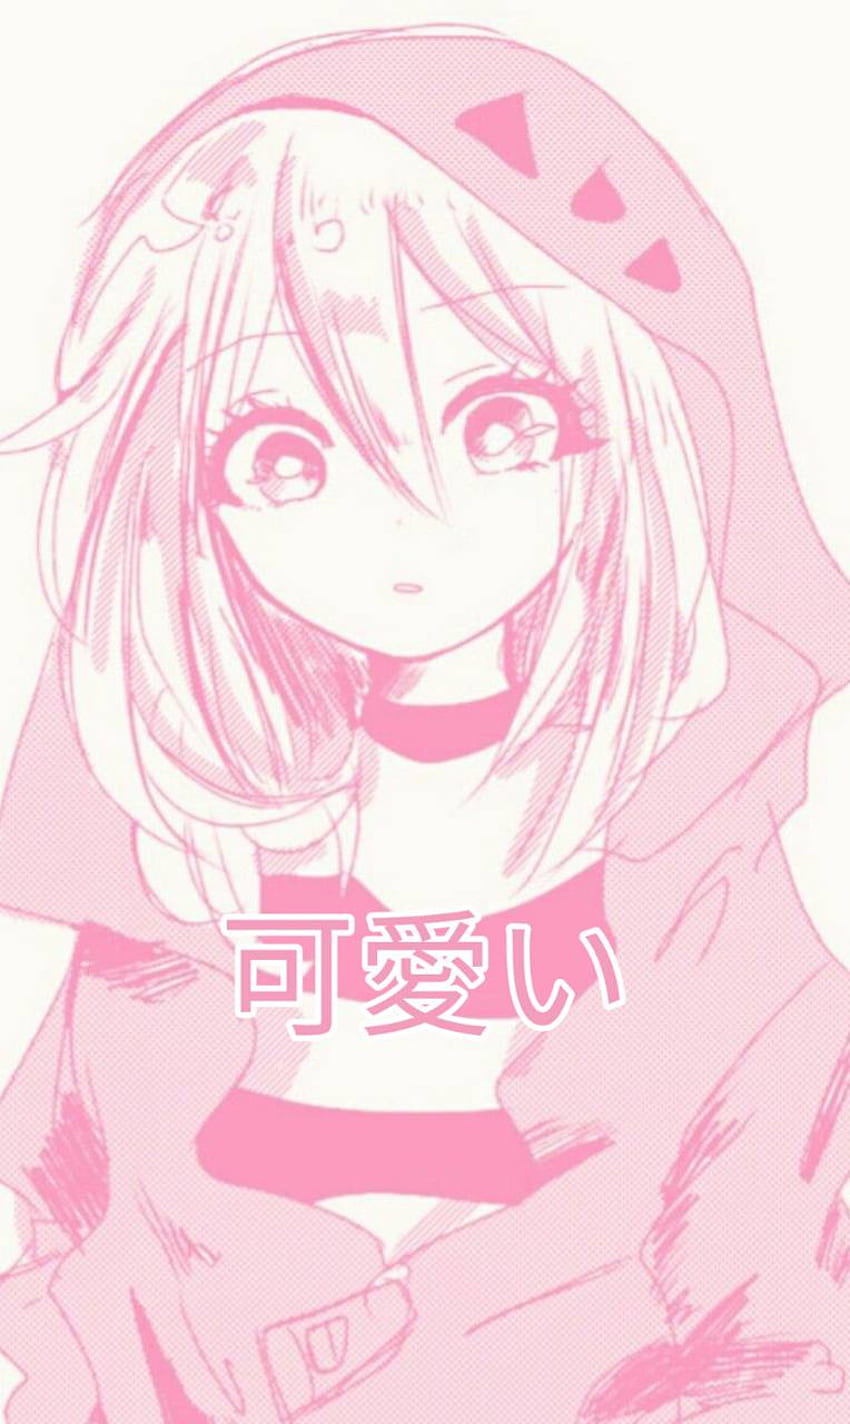 Discover 154 Pink Hair Anime Girl Dedaotaonec